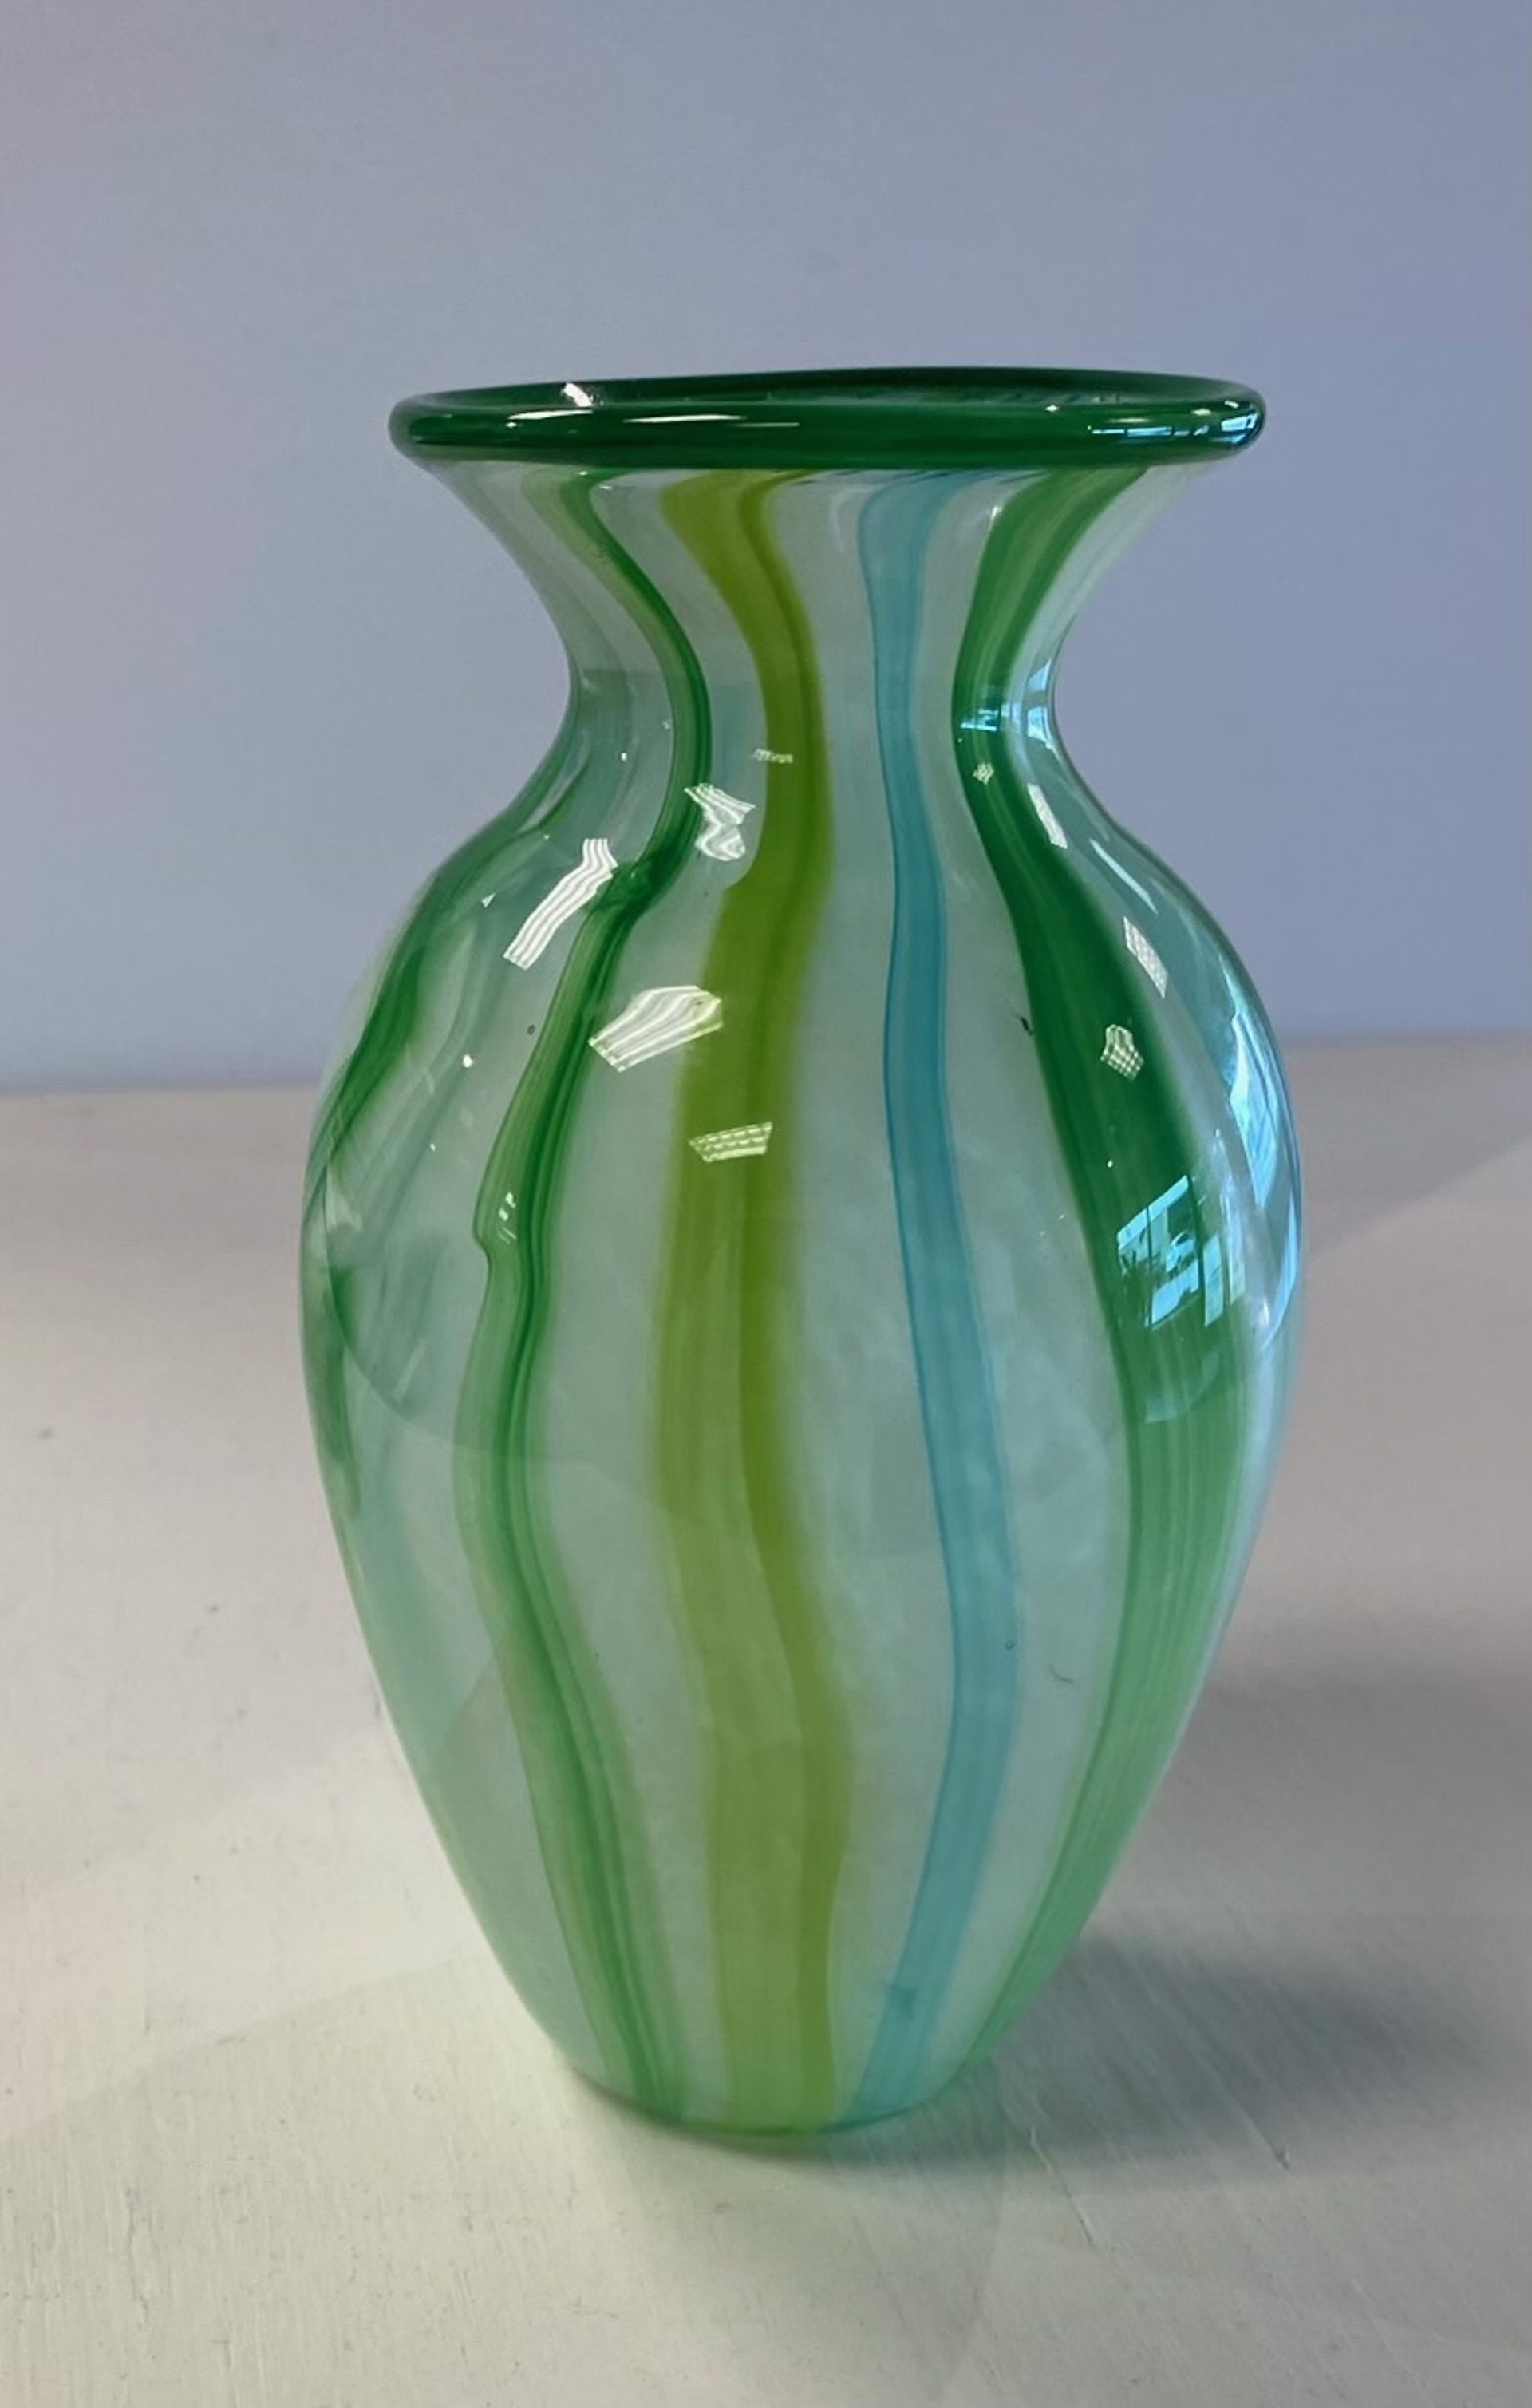 Green Stripe vase by AlBo Glass